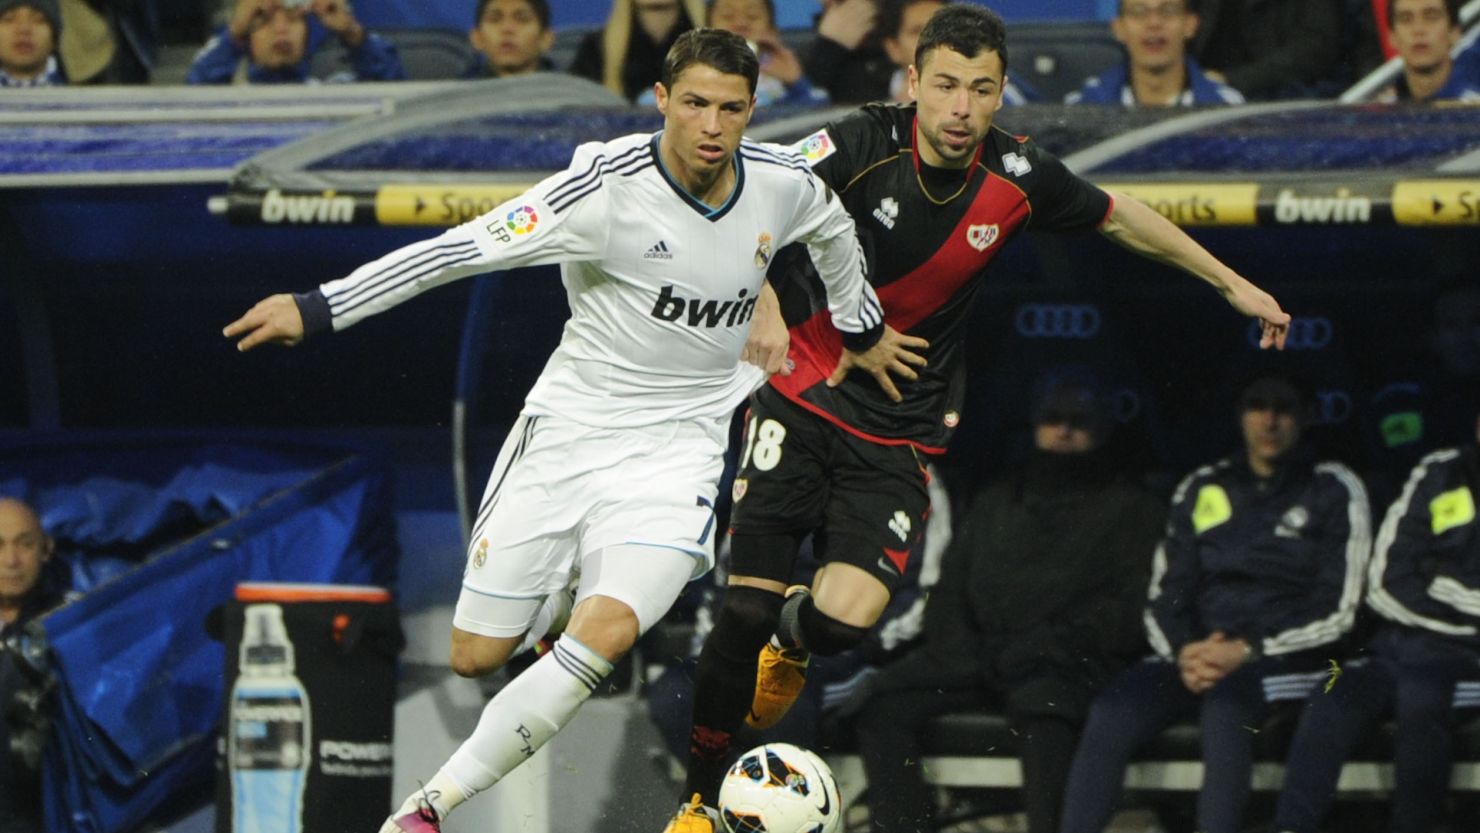 Cristiano Ronaldo failed to add to his impressive goal tally during Real Madrid's 2-0 win over Rayo Vallecano.